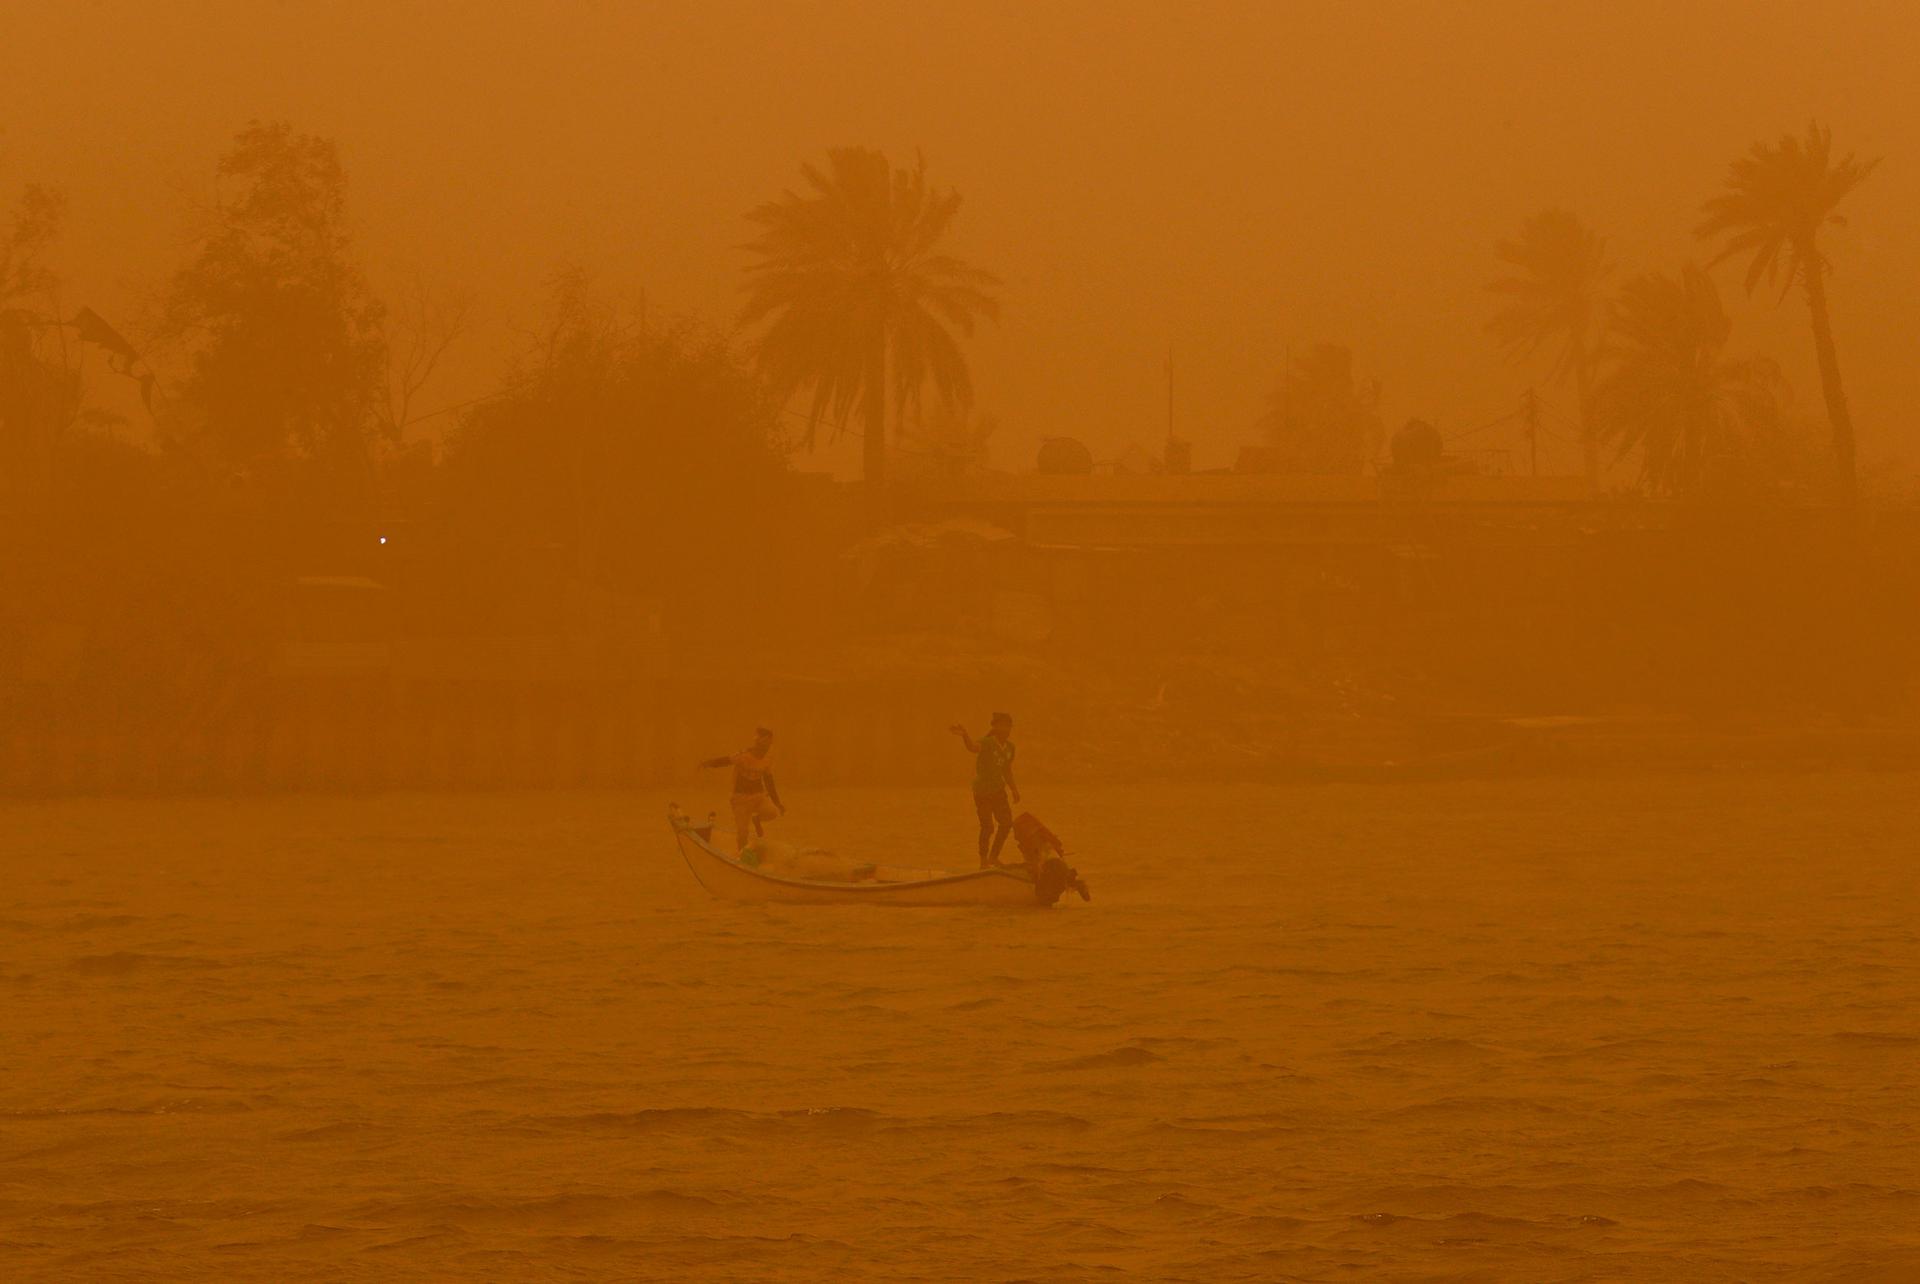 Fishermen navigate on the Shatt al-Arab waterway during a sandstorm in Basra, Iraq, Monday, May 23, 2022.